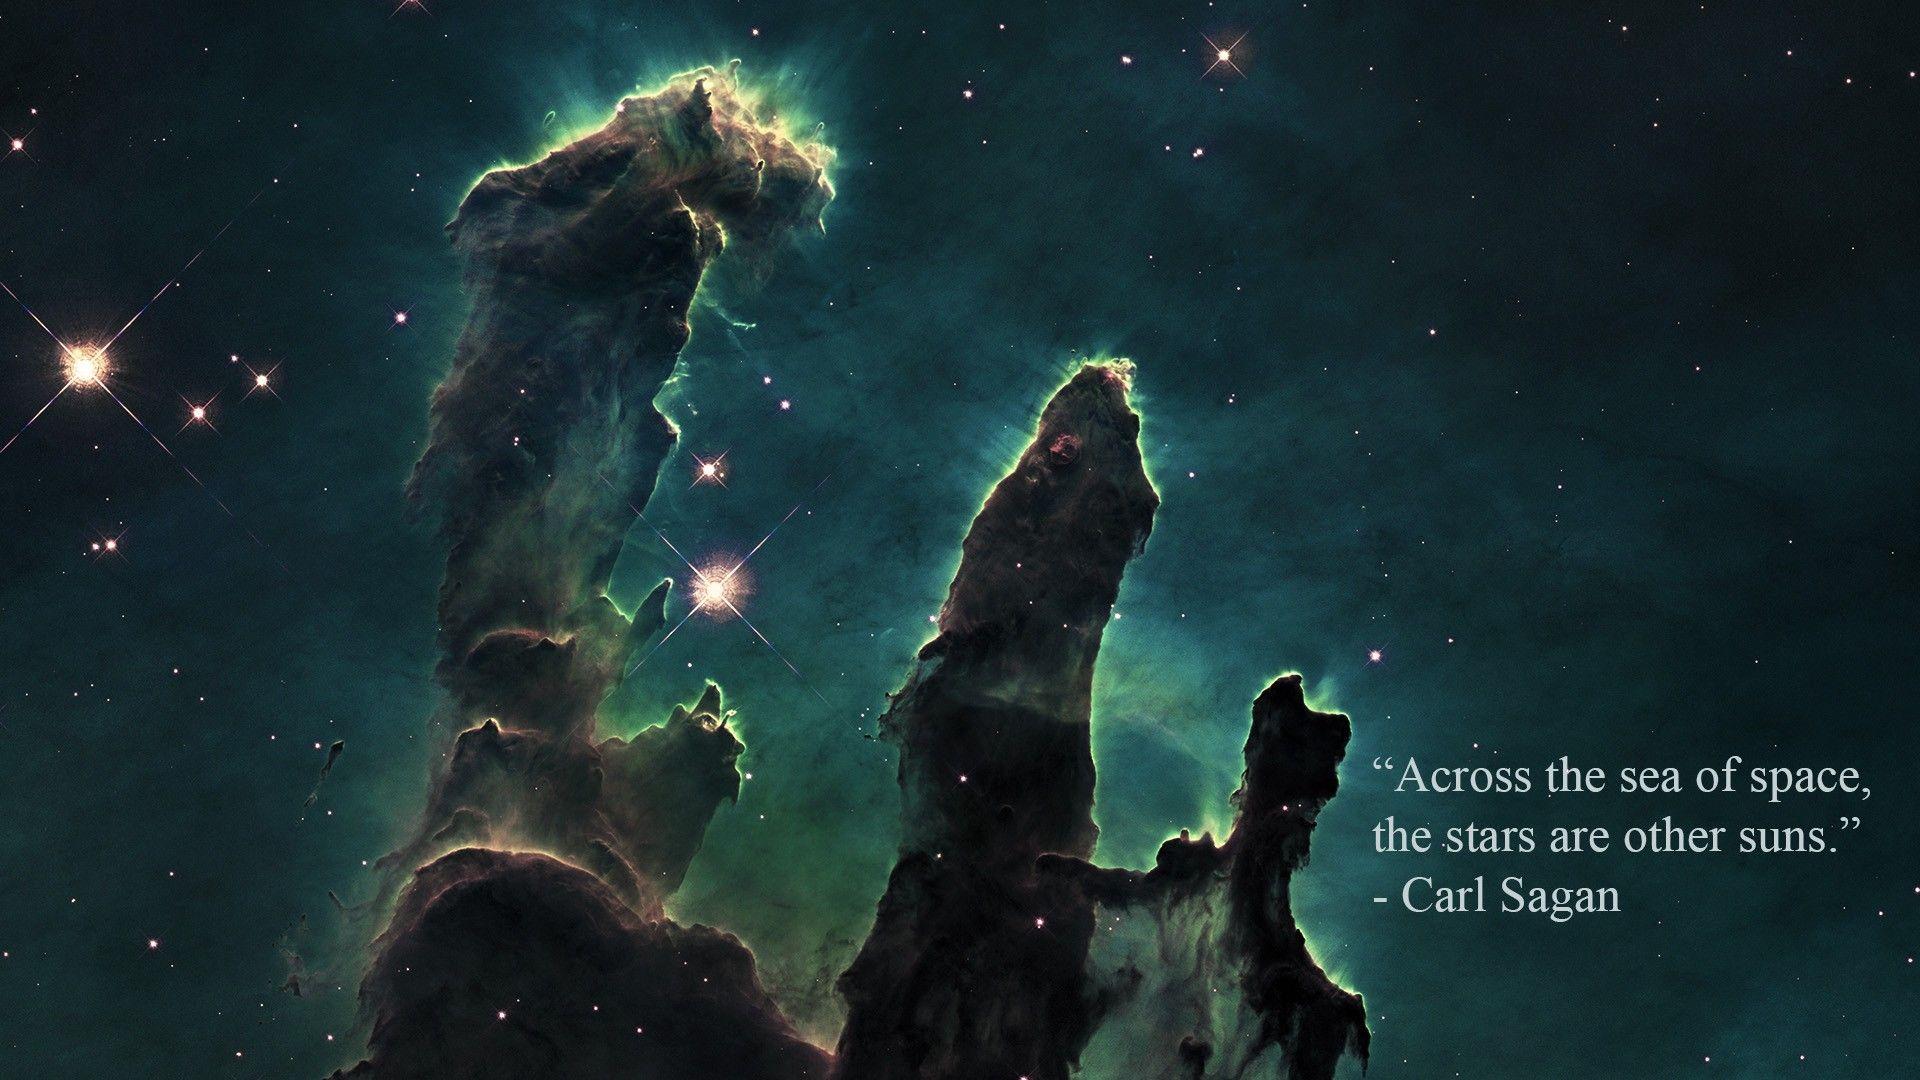 Wallpaper, 1920x1080 px, Carl Sagan, nebula, Pillars